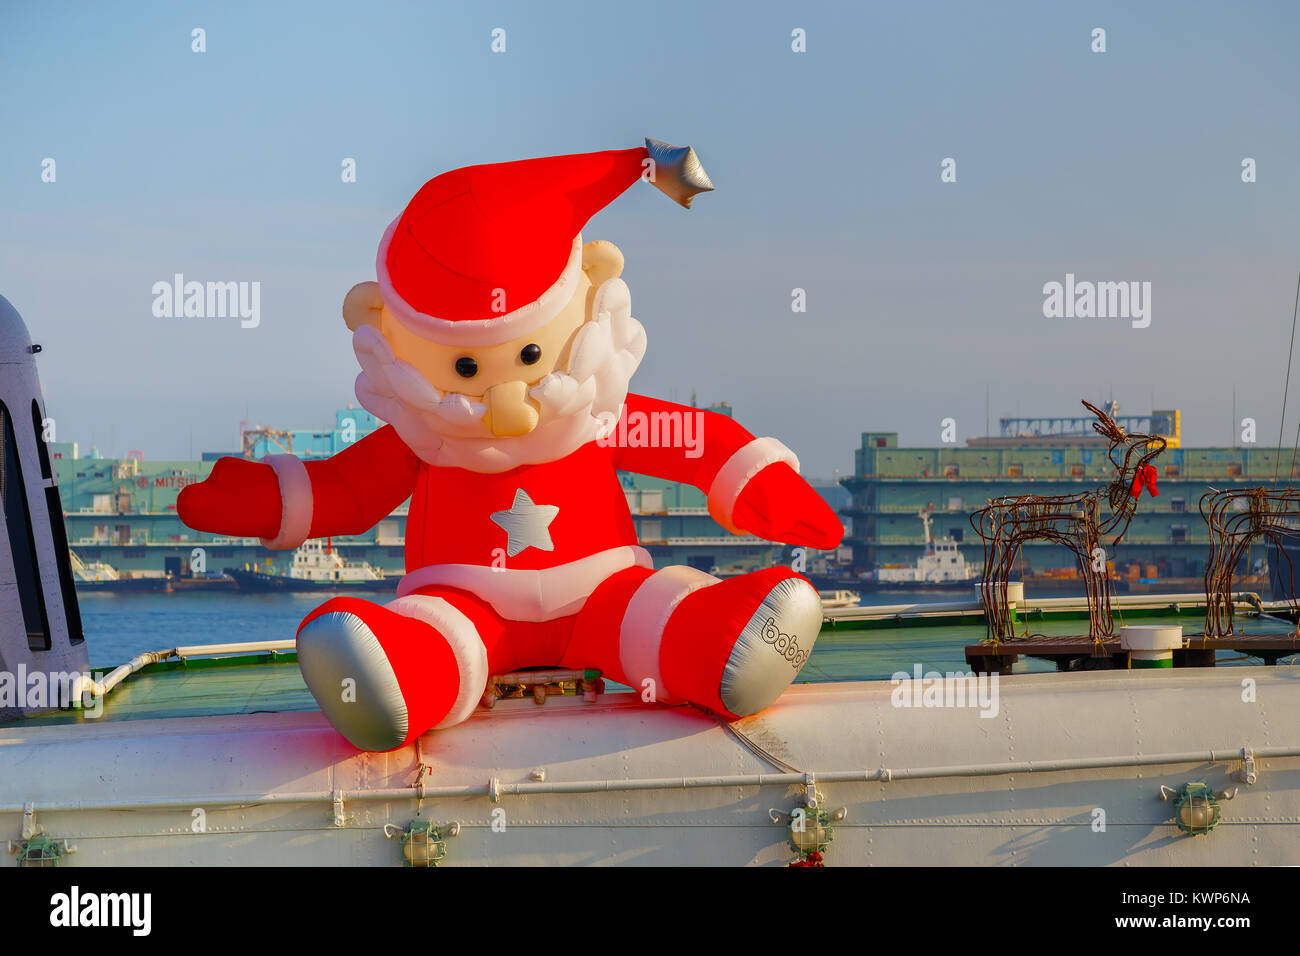 YOKOHAMA, JAPAN - NOVEMBER 24 2015: Inflatable santa claus doll on the top deck of a ship at Yokohama port Stock Photo